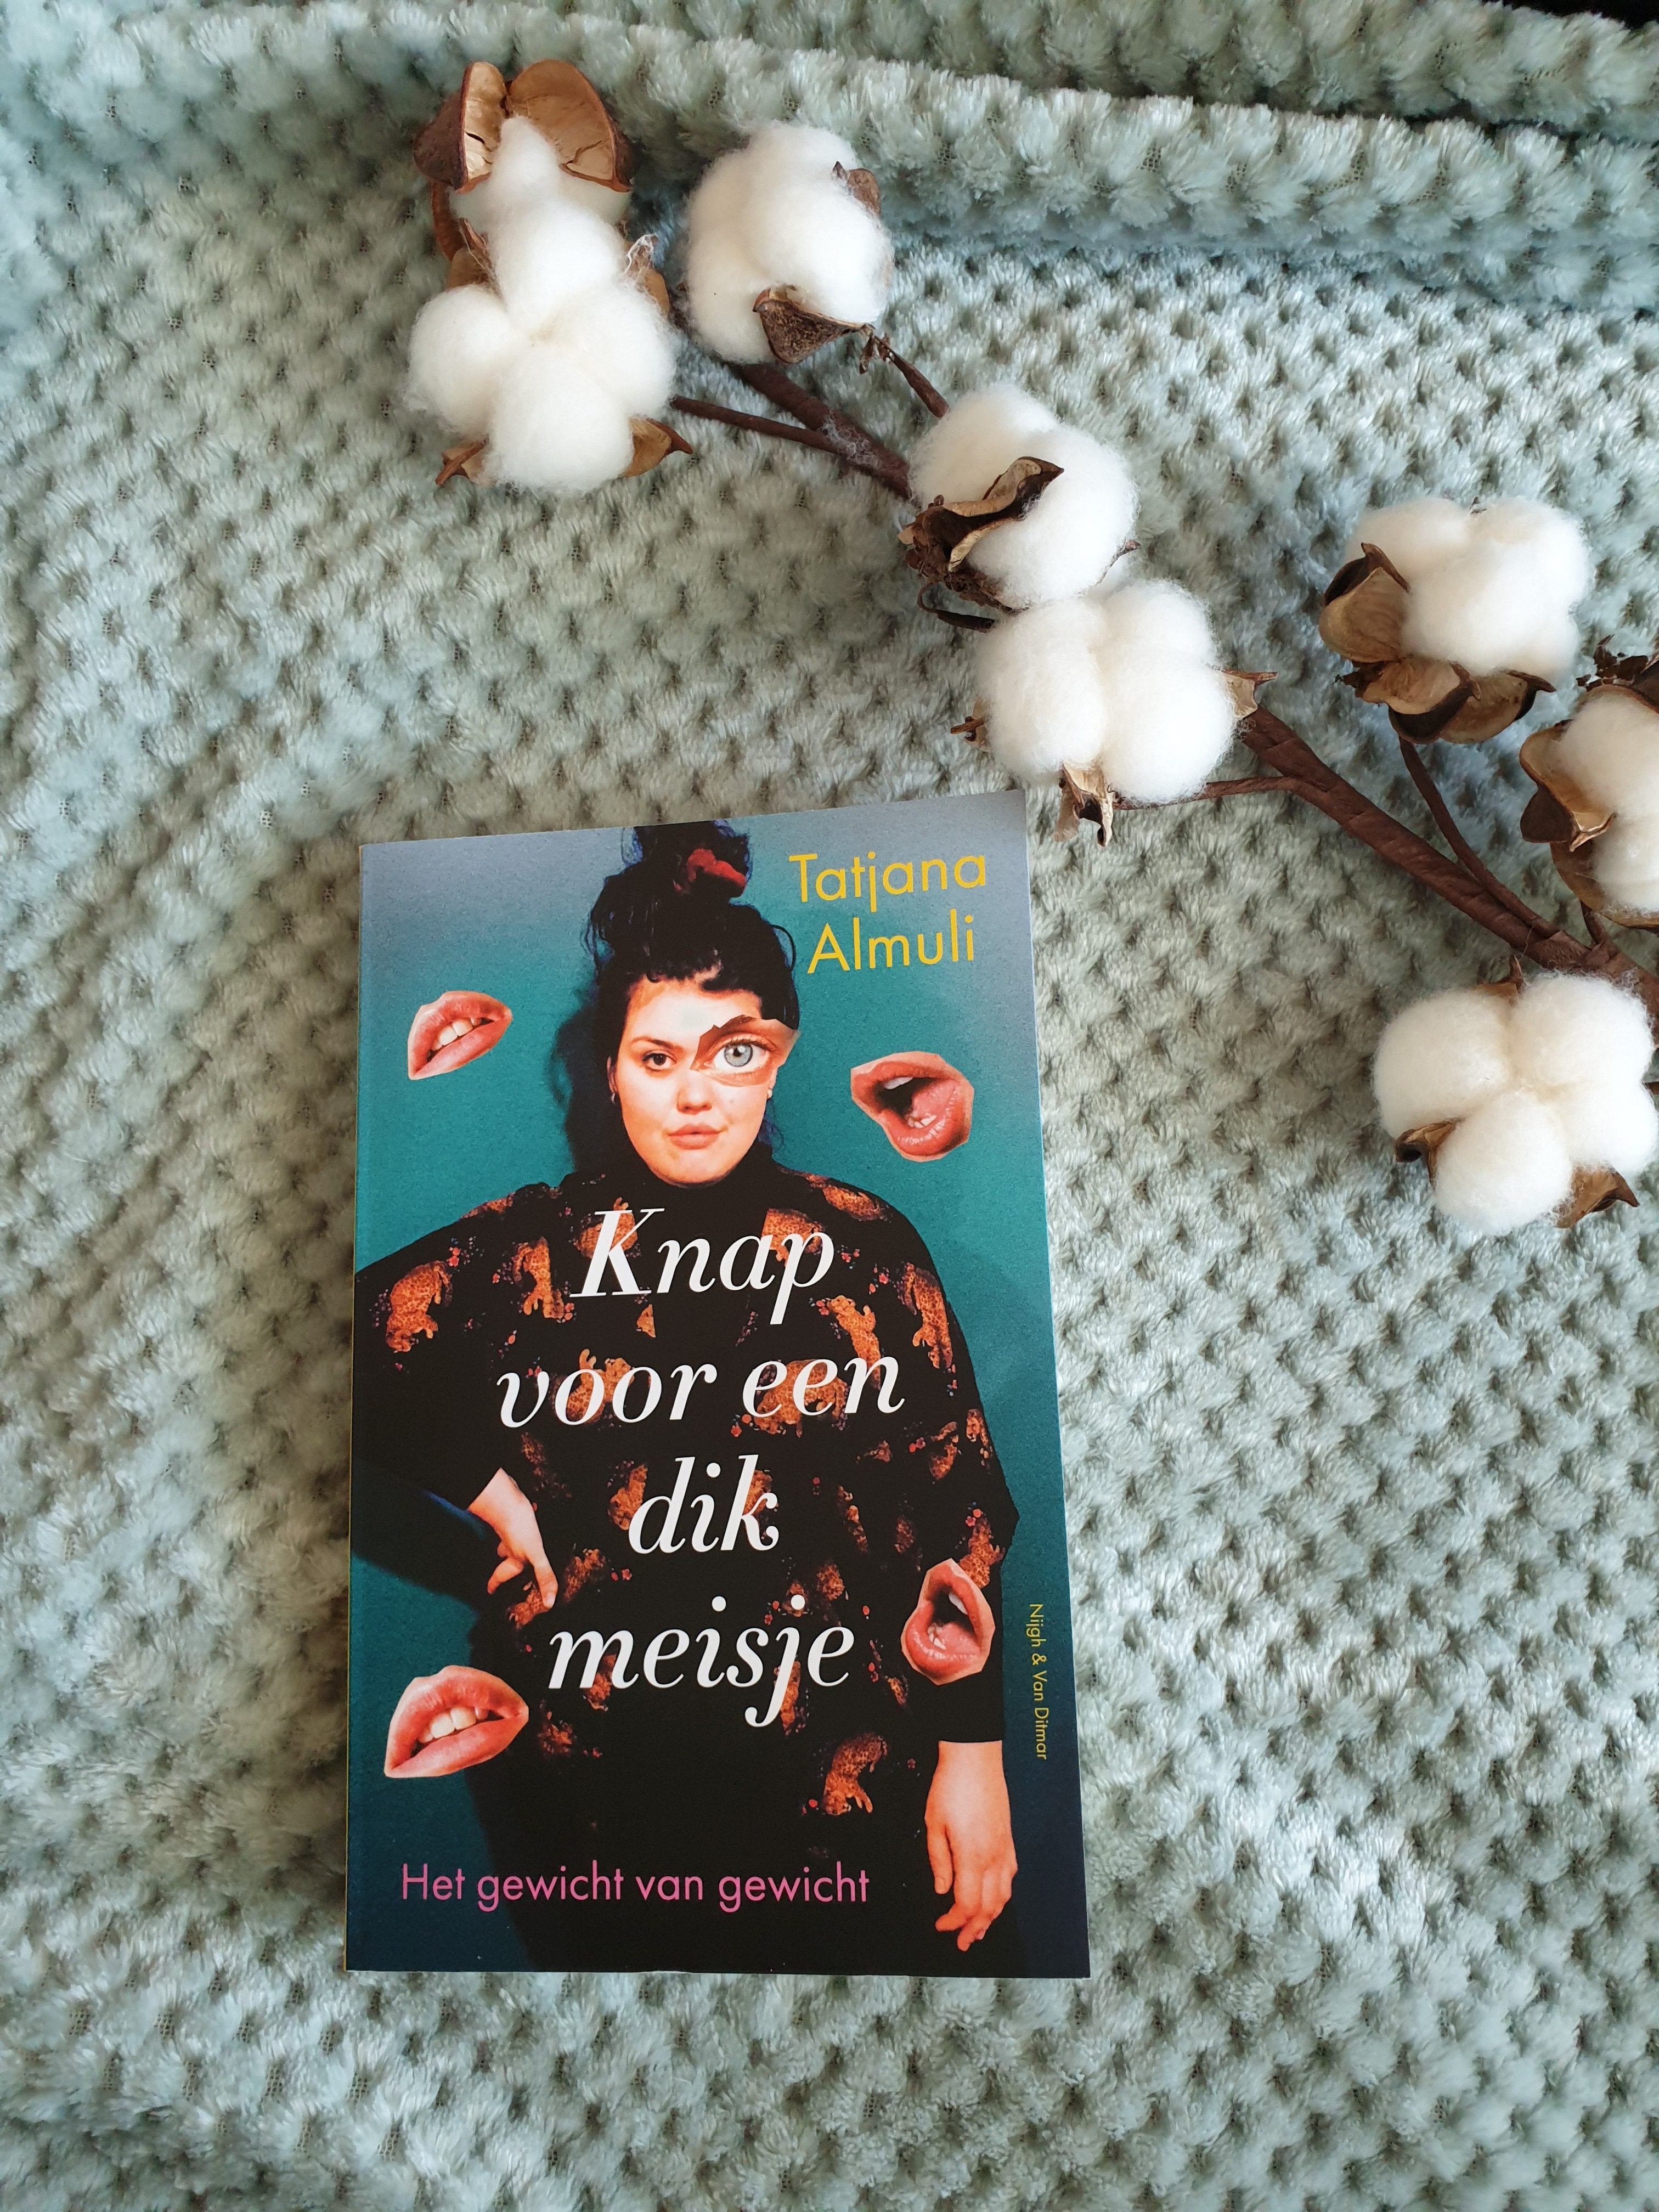 Book Thursday || Knap voor een dik meisje – Tatjana Almuli